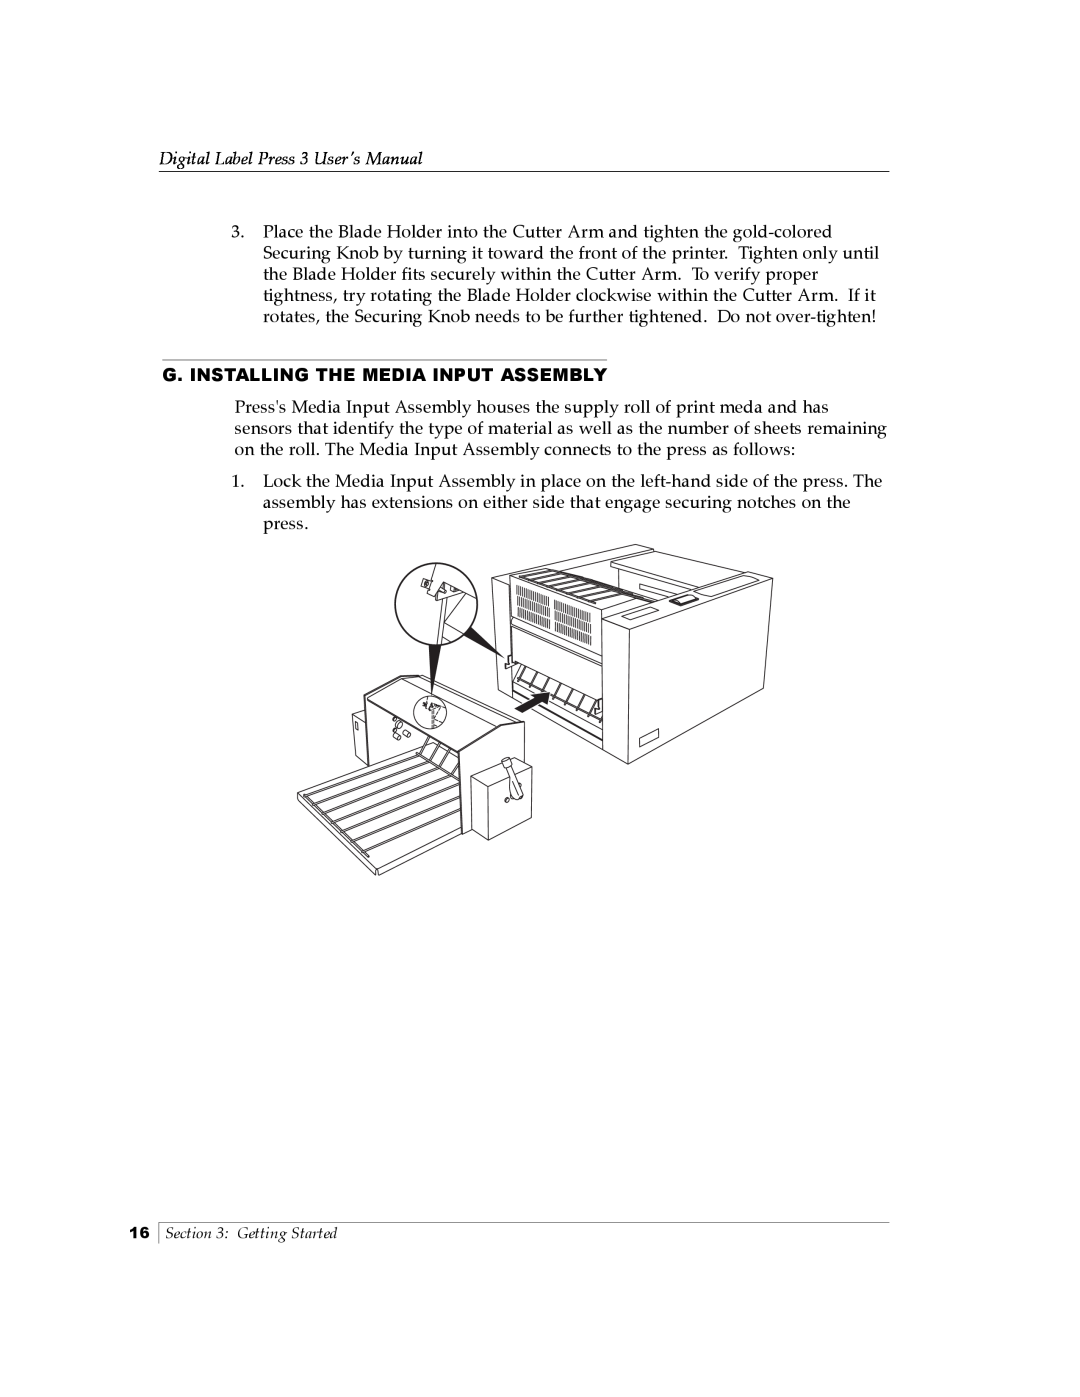 Primera Technology 510212 manual G. Installing The Media Input Assembly, Digital Label Press 3 User’s Manual 